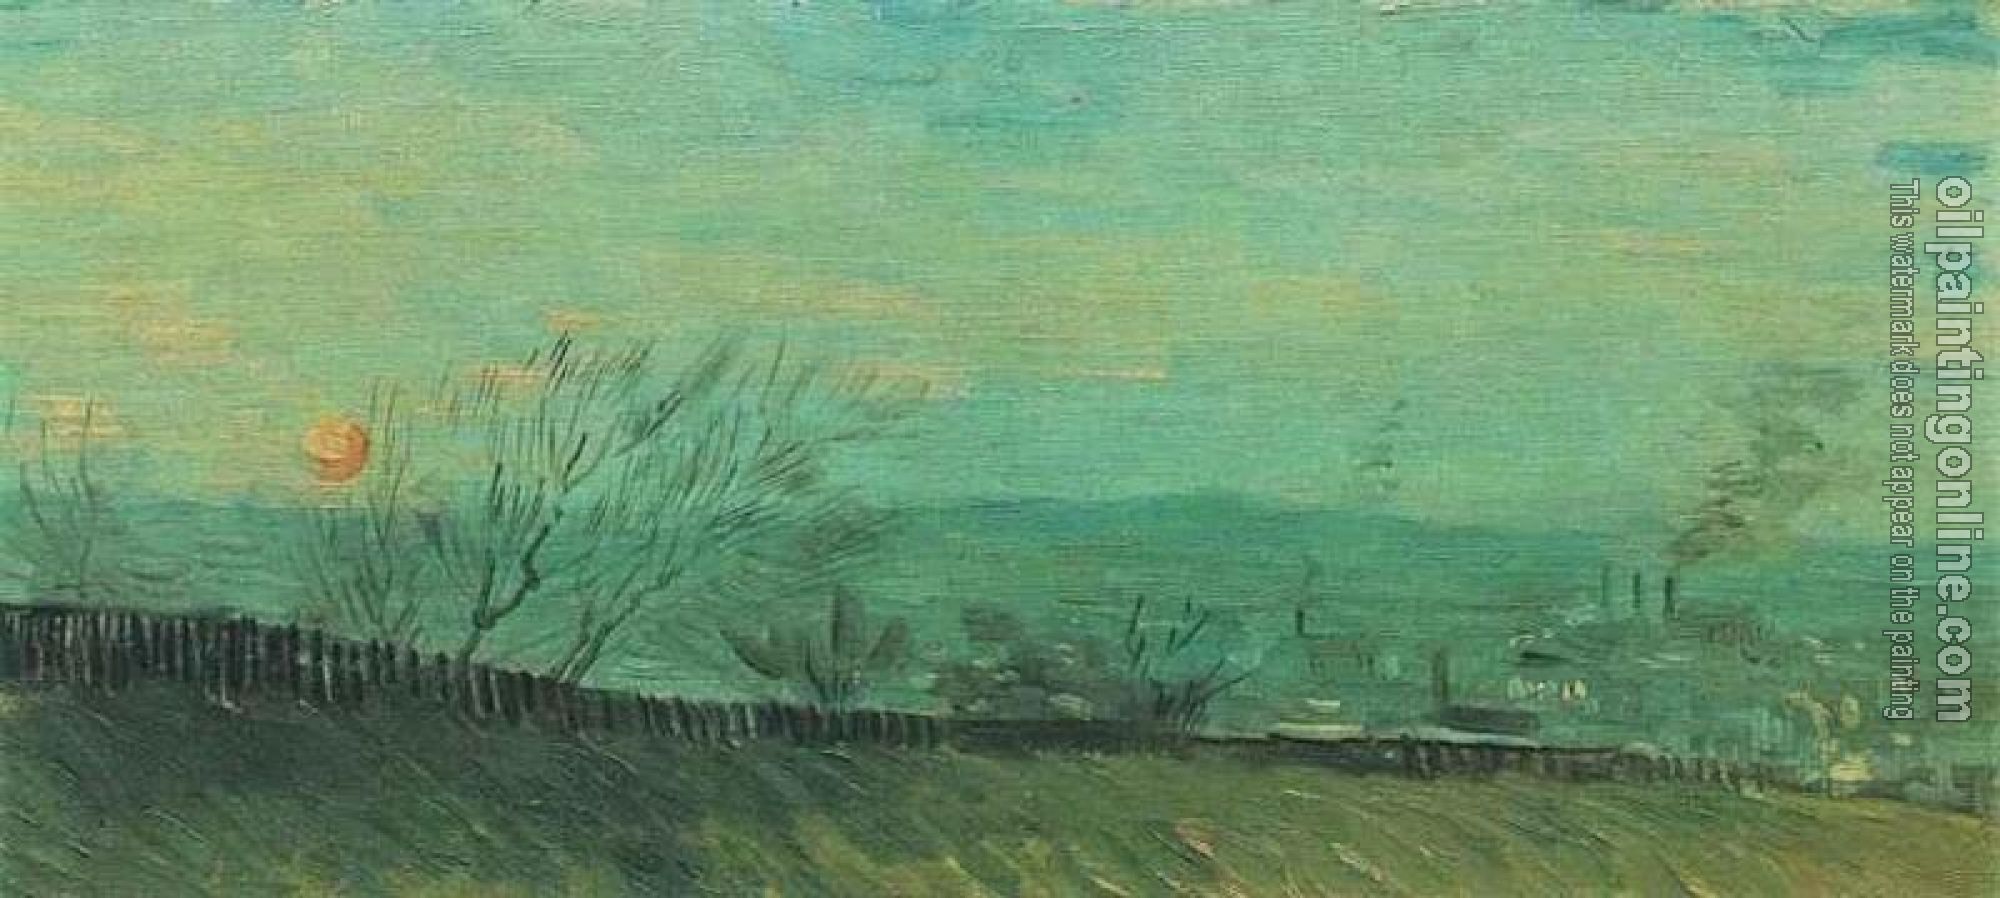 Gogh, Vincent van - Factories Seen from a Hillside in Moonlight